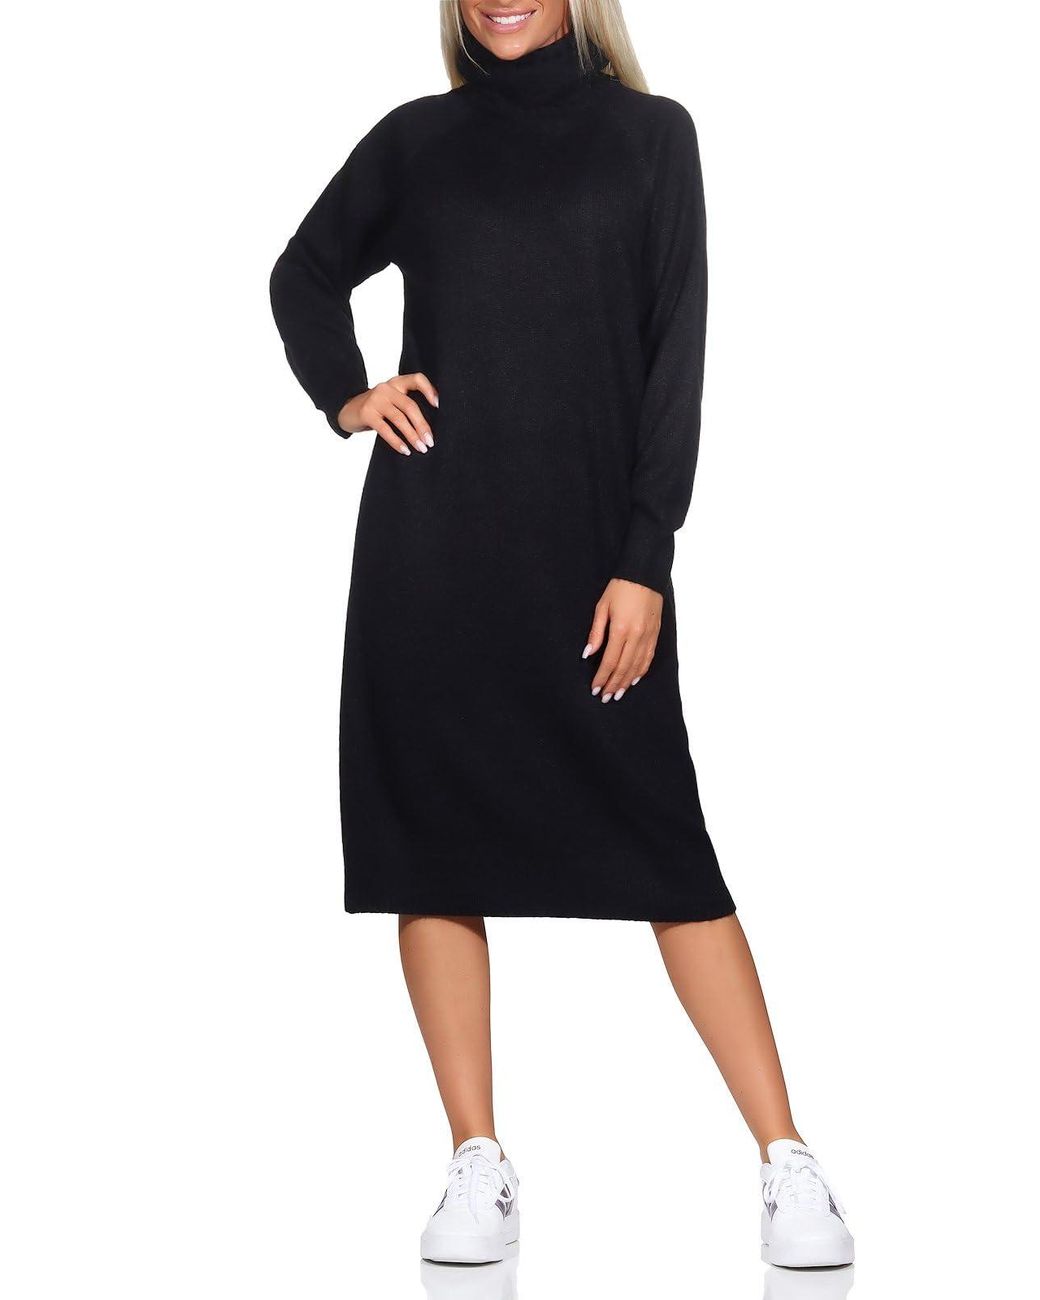 Ls Moda Noos Bestseller Black Vero Ga Vmdaniela Cowlneck Lyst | UK Dress in A/s